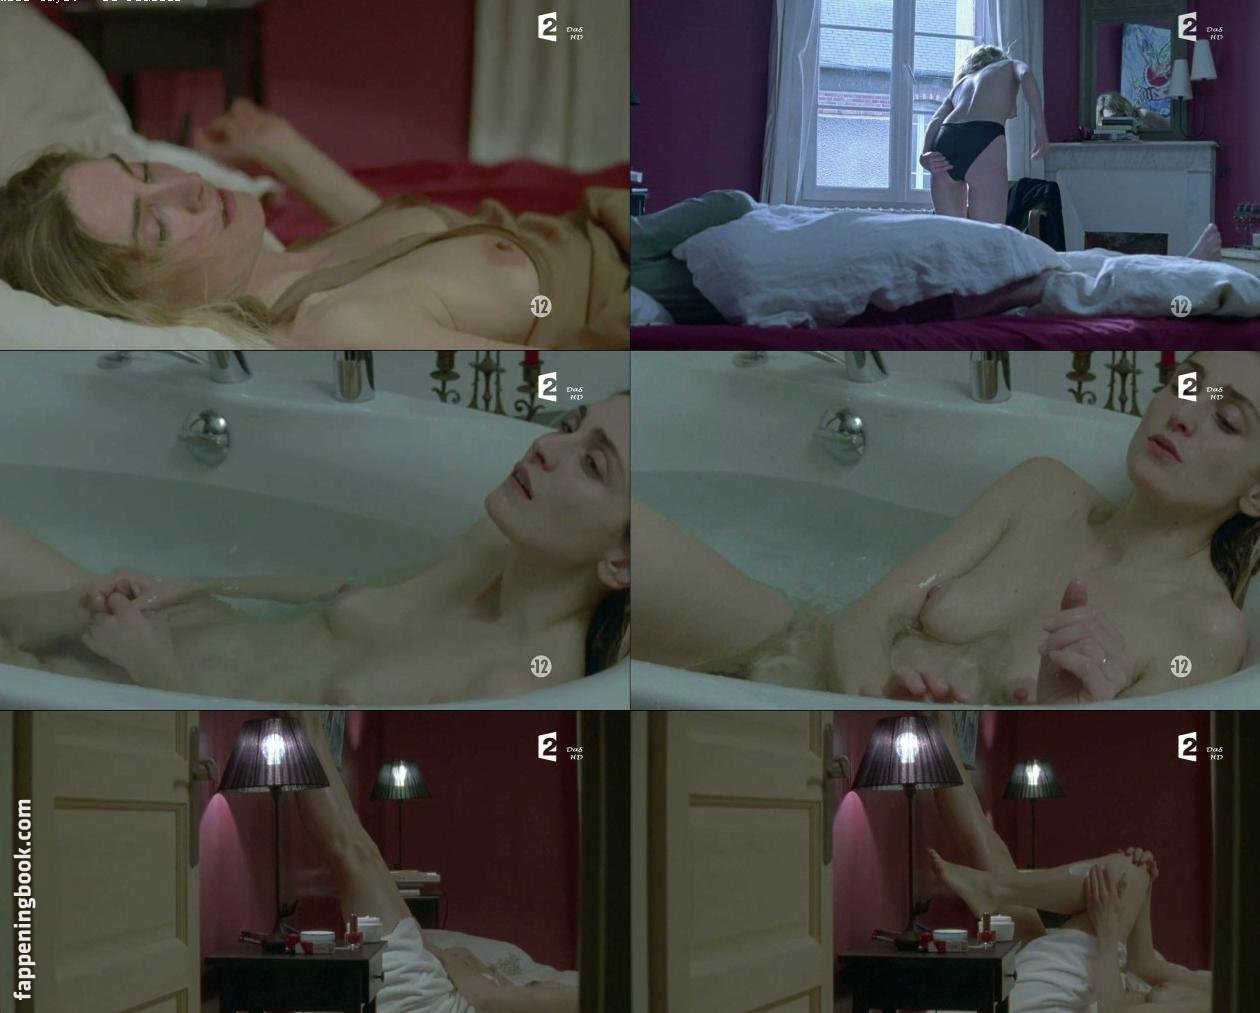 Julie Gayet Nude